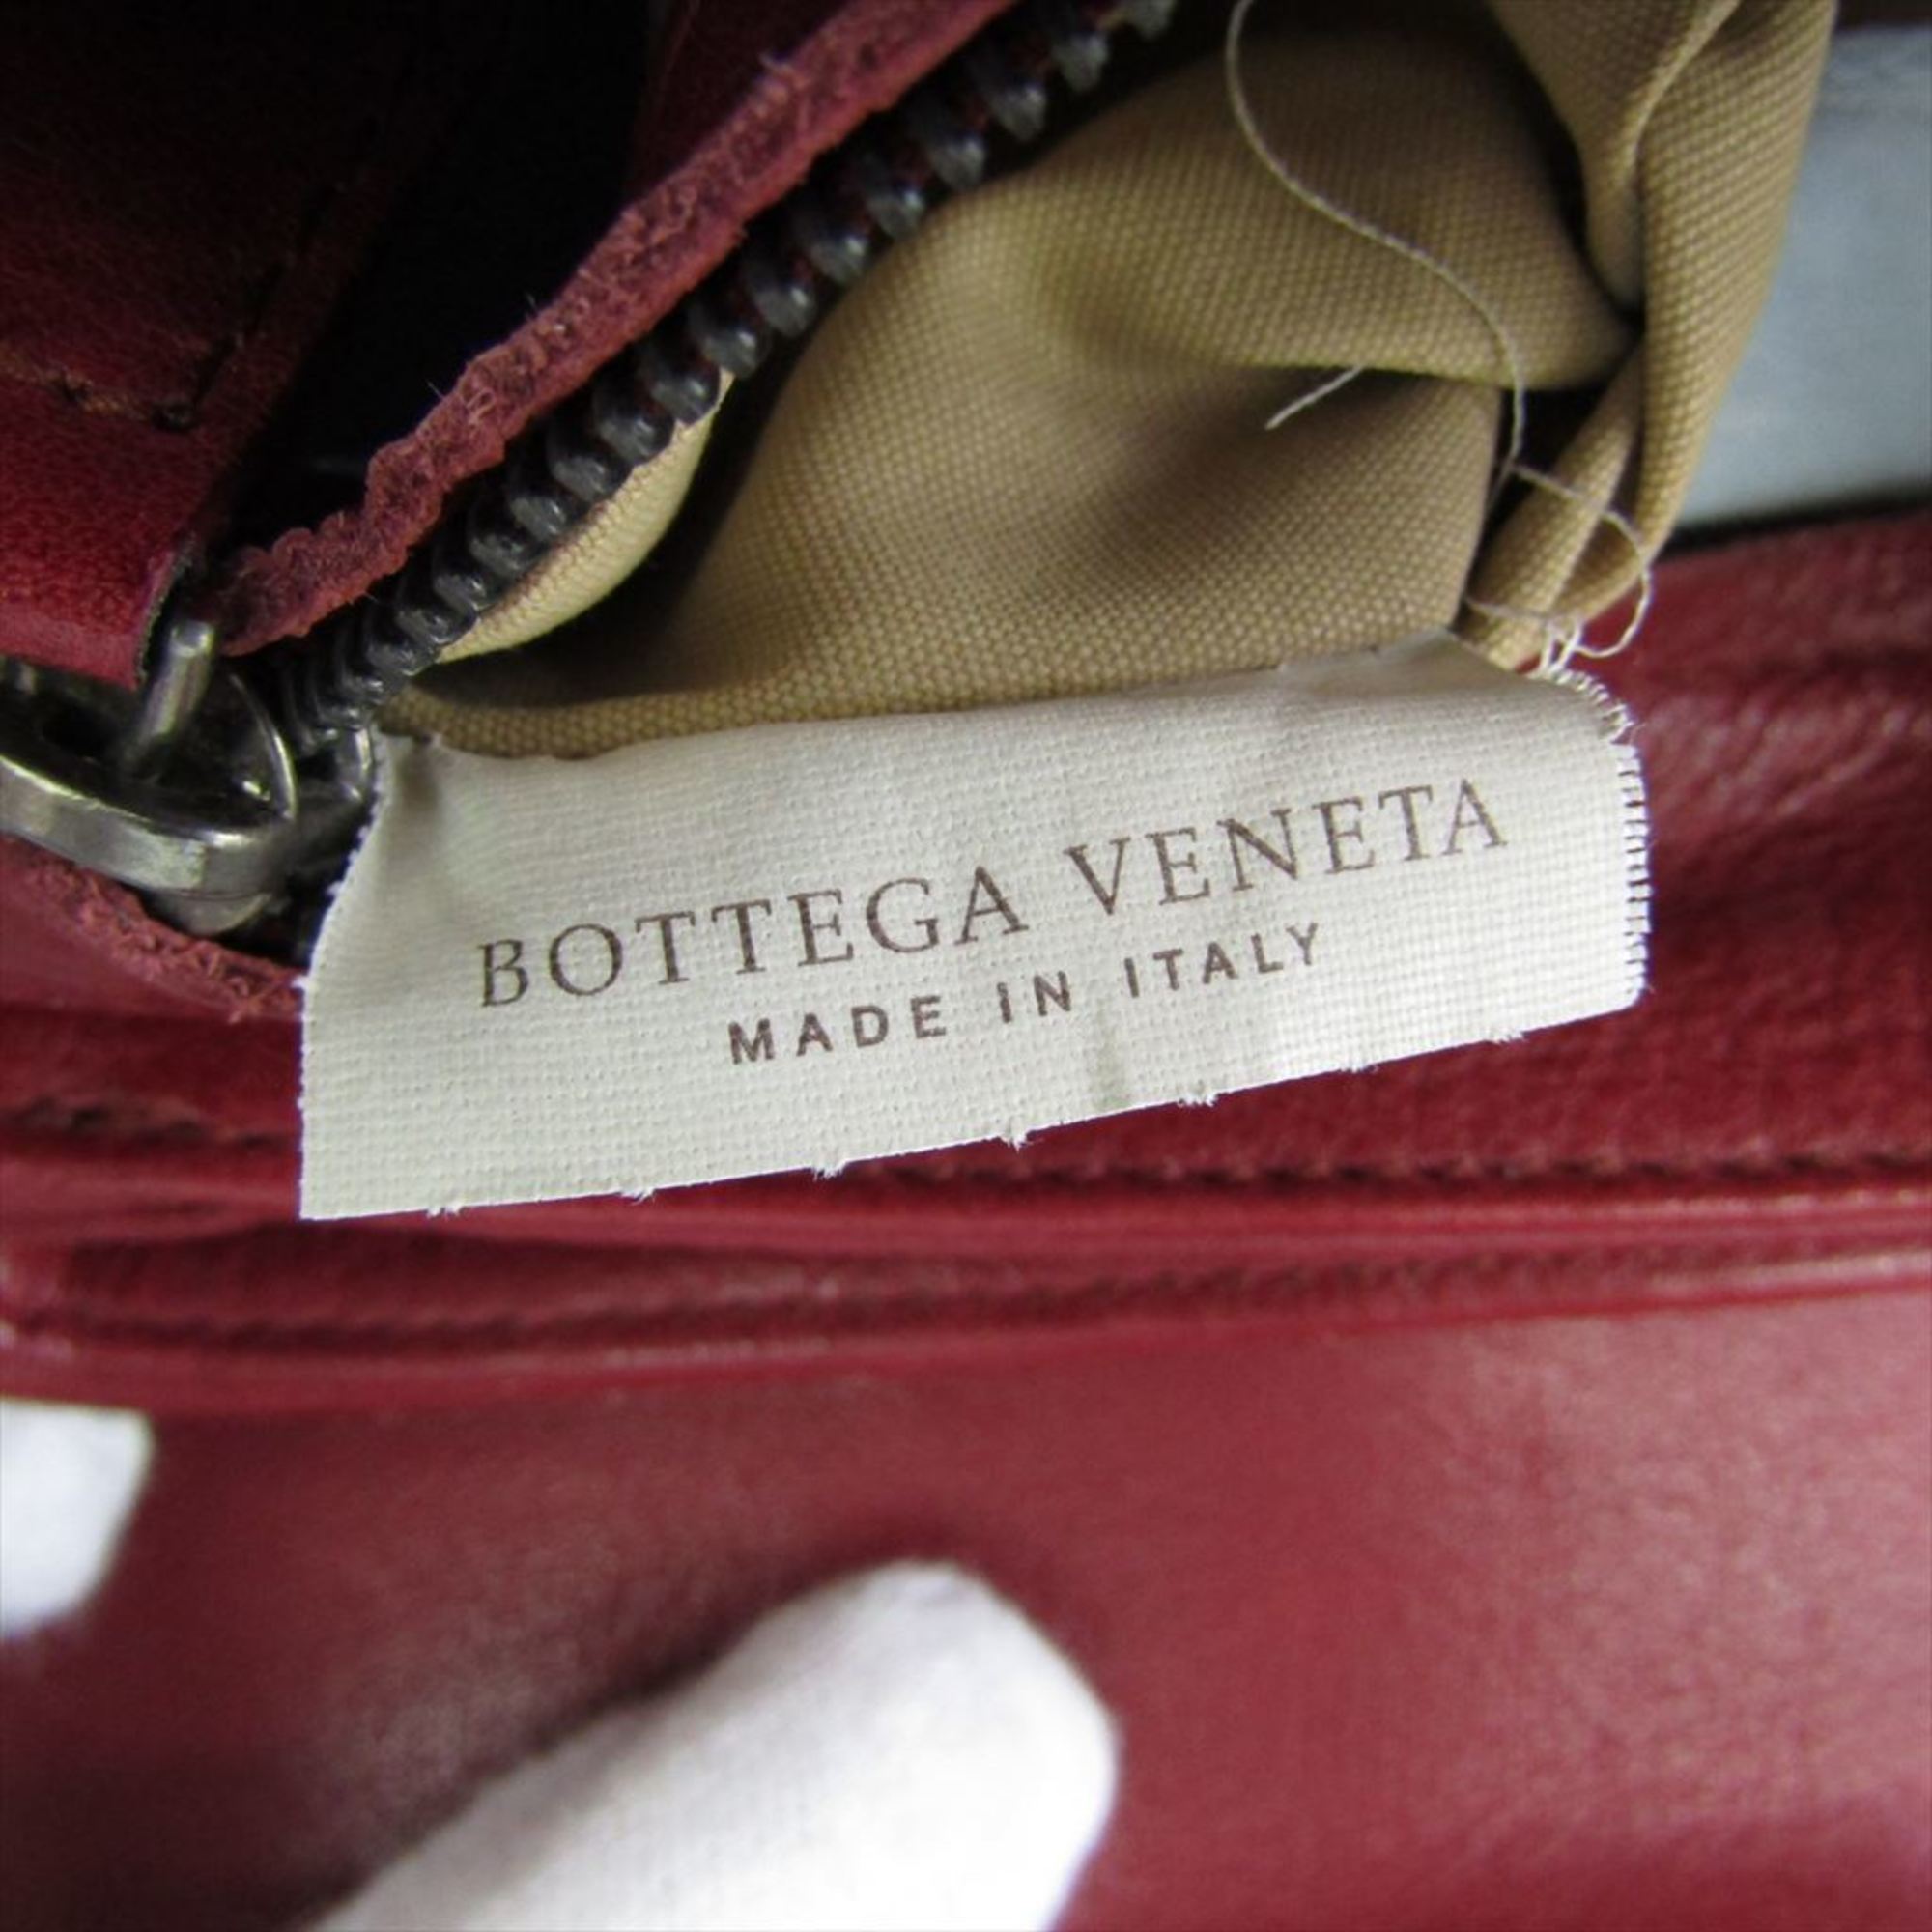 Bottega Veneta Women's Leather Handbag Brown,Red Color